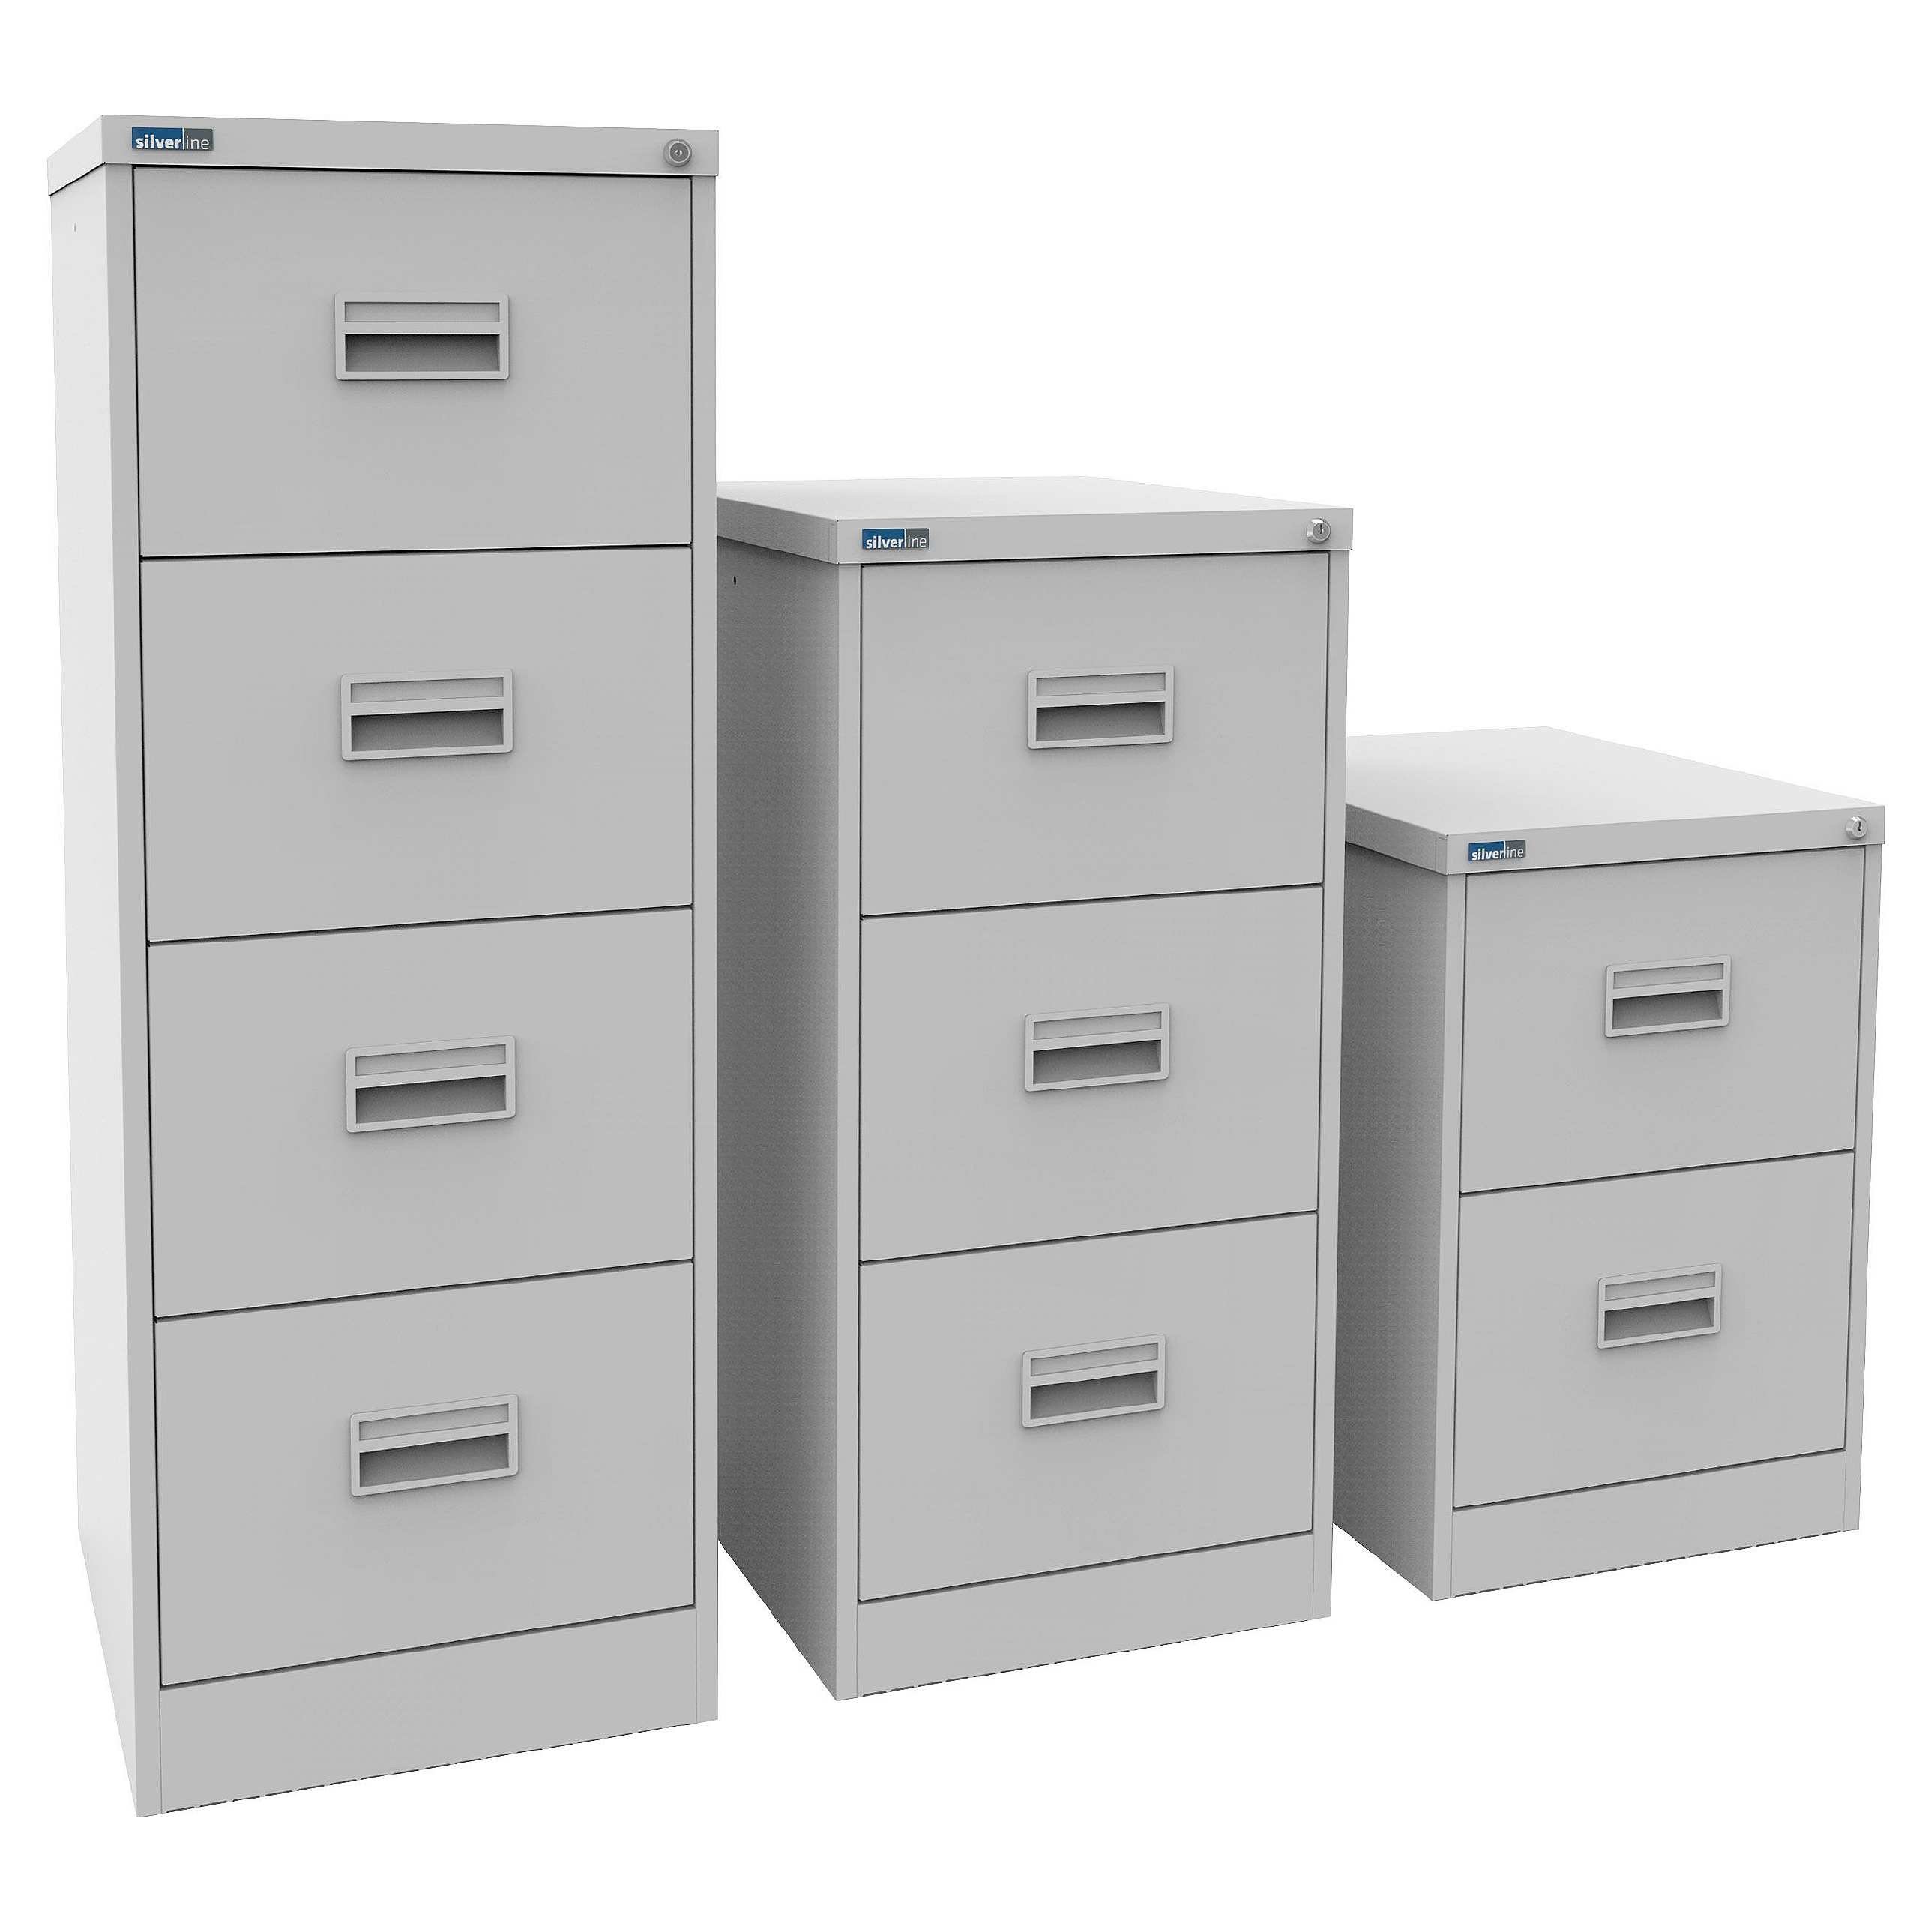 A4 Filing Cabinets Uk Bisley Metal Filing Cabinet 2 Drawer A4